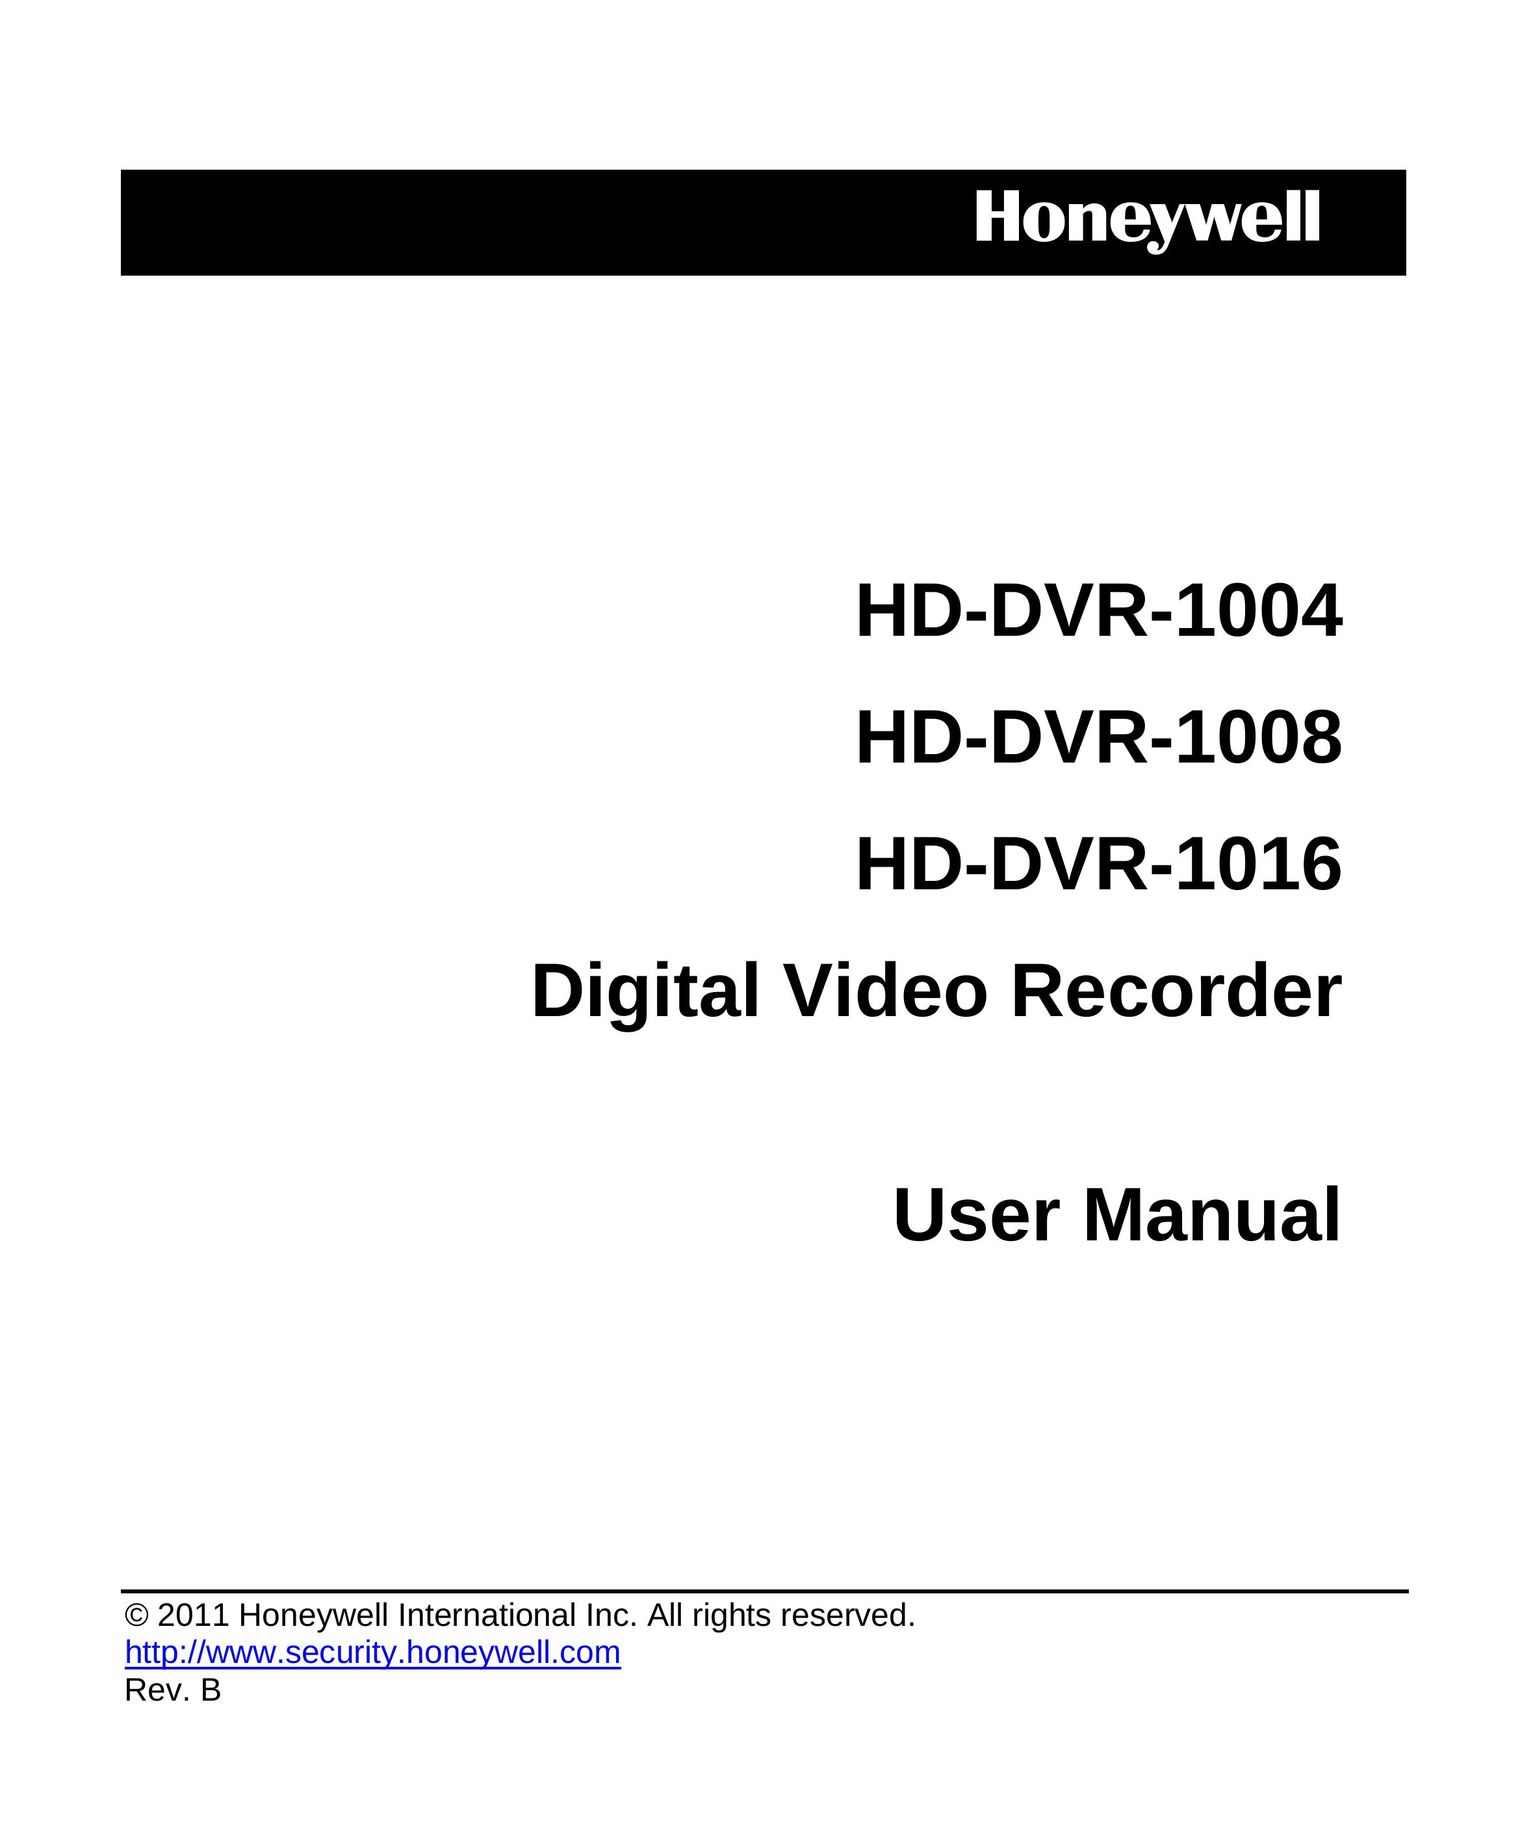 Honeywell HD-DVR-1008 DVR User Manual